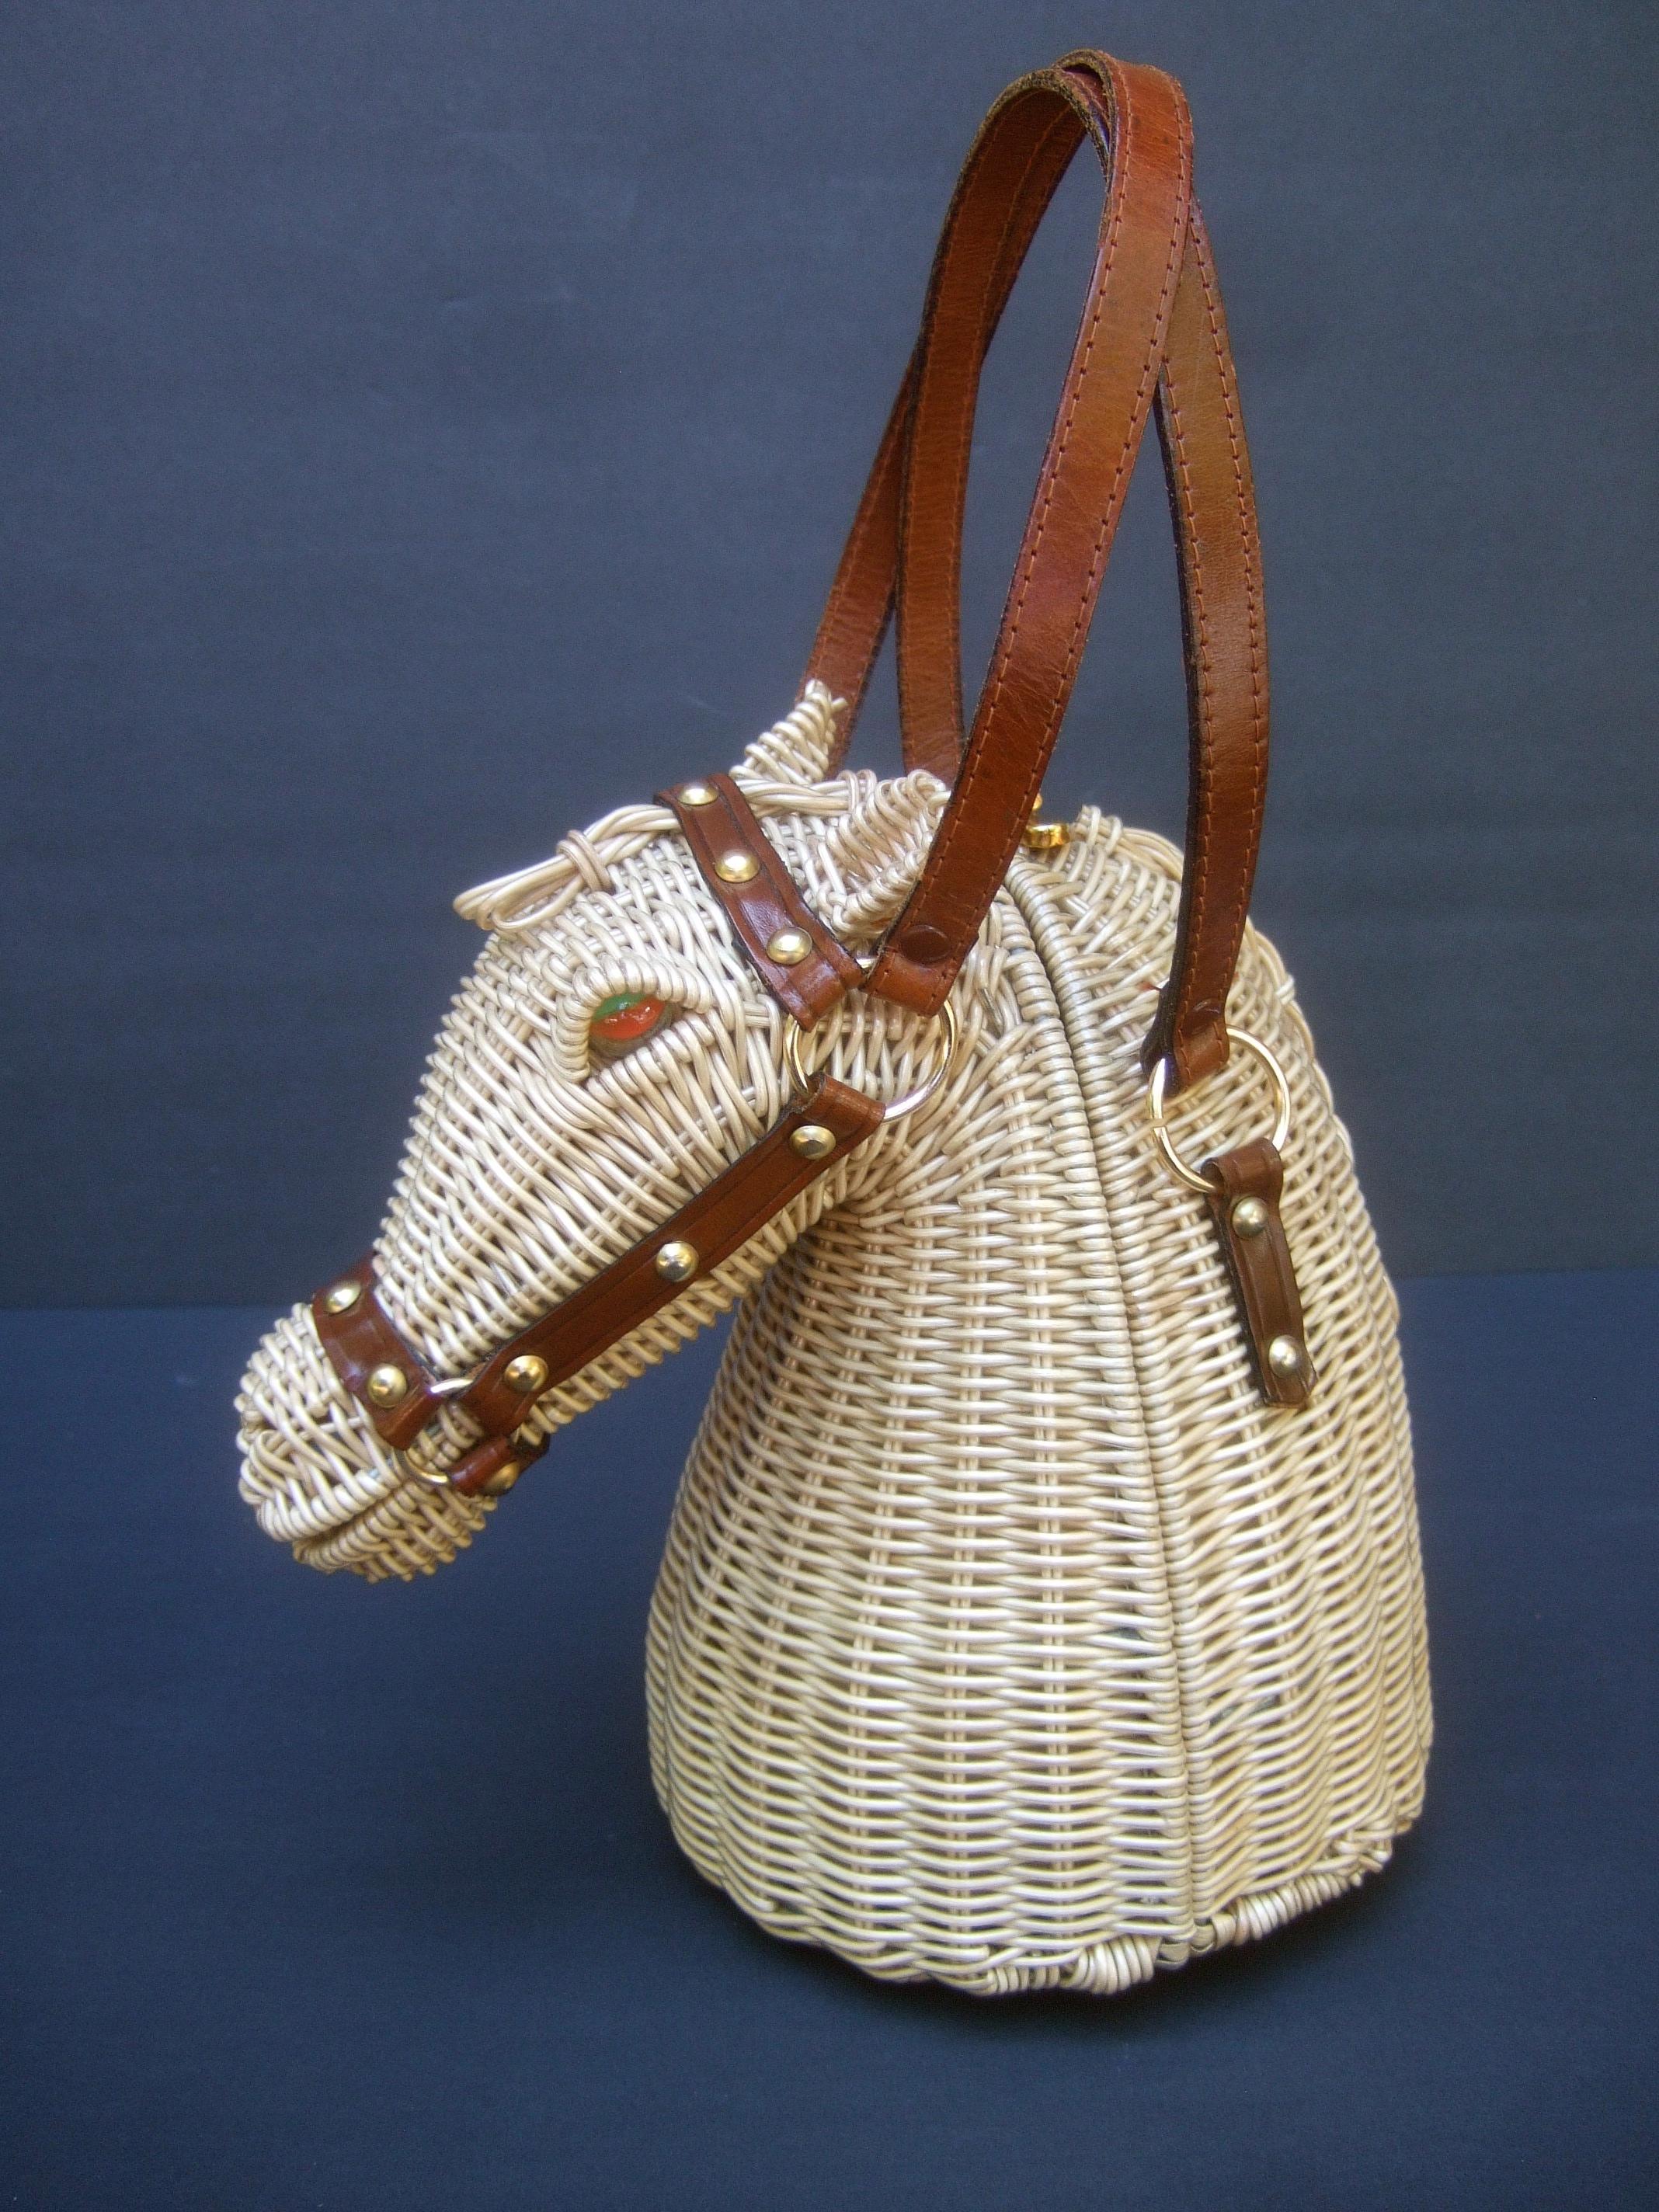 Extremely Rare Figural Wicker Artisan Horse Design Handbag c 1970 3